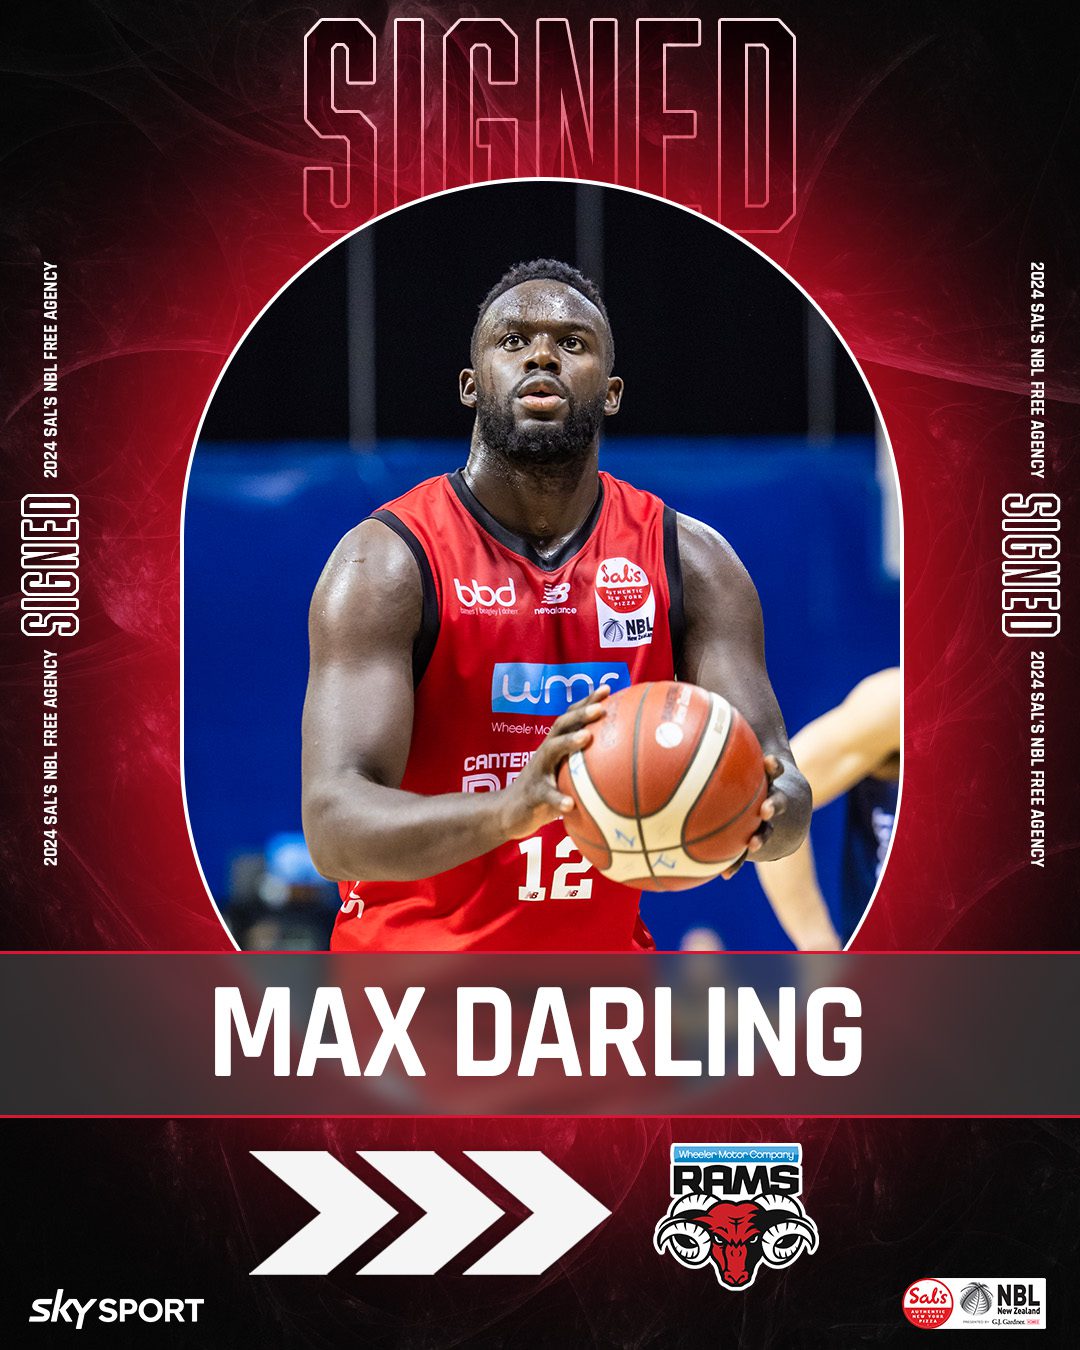 Max Darling